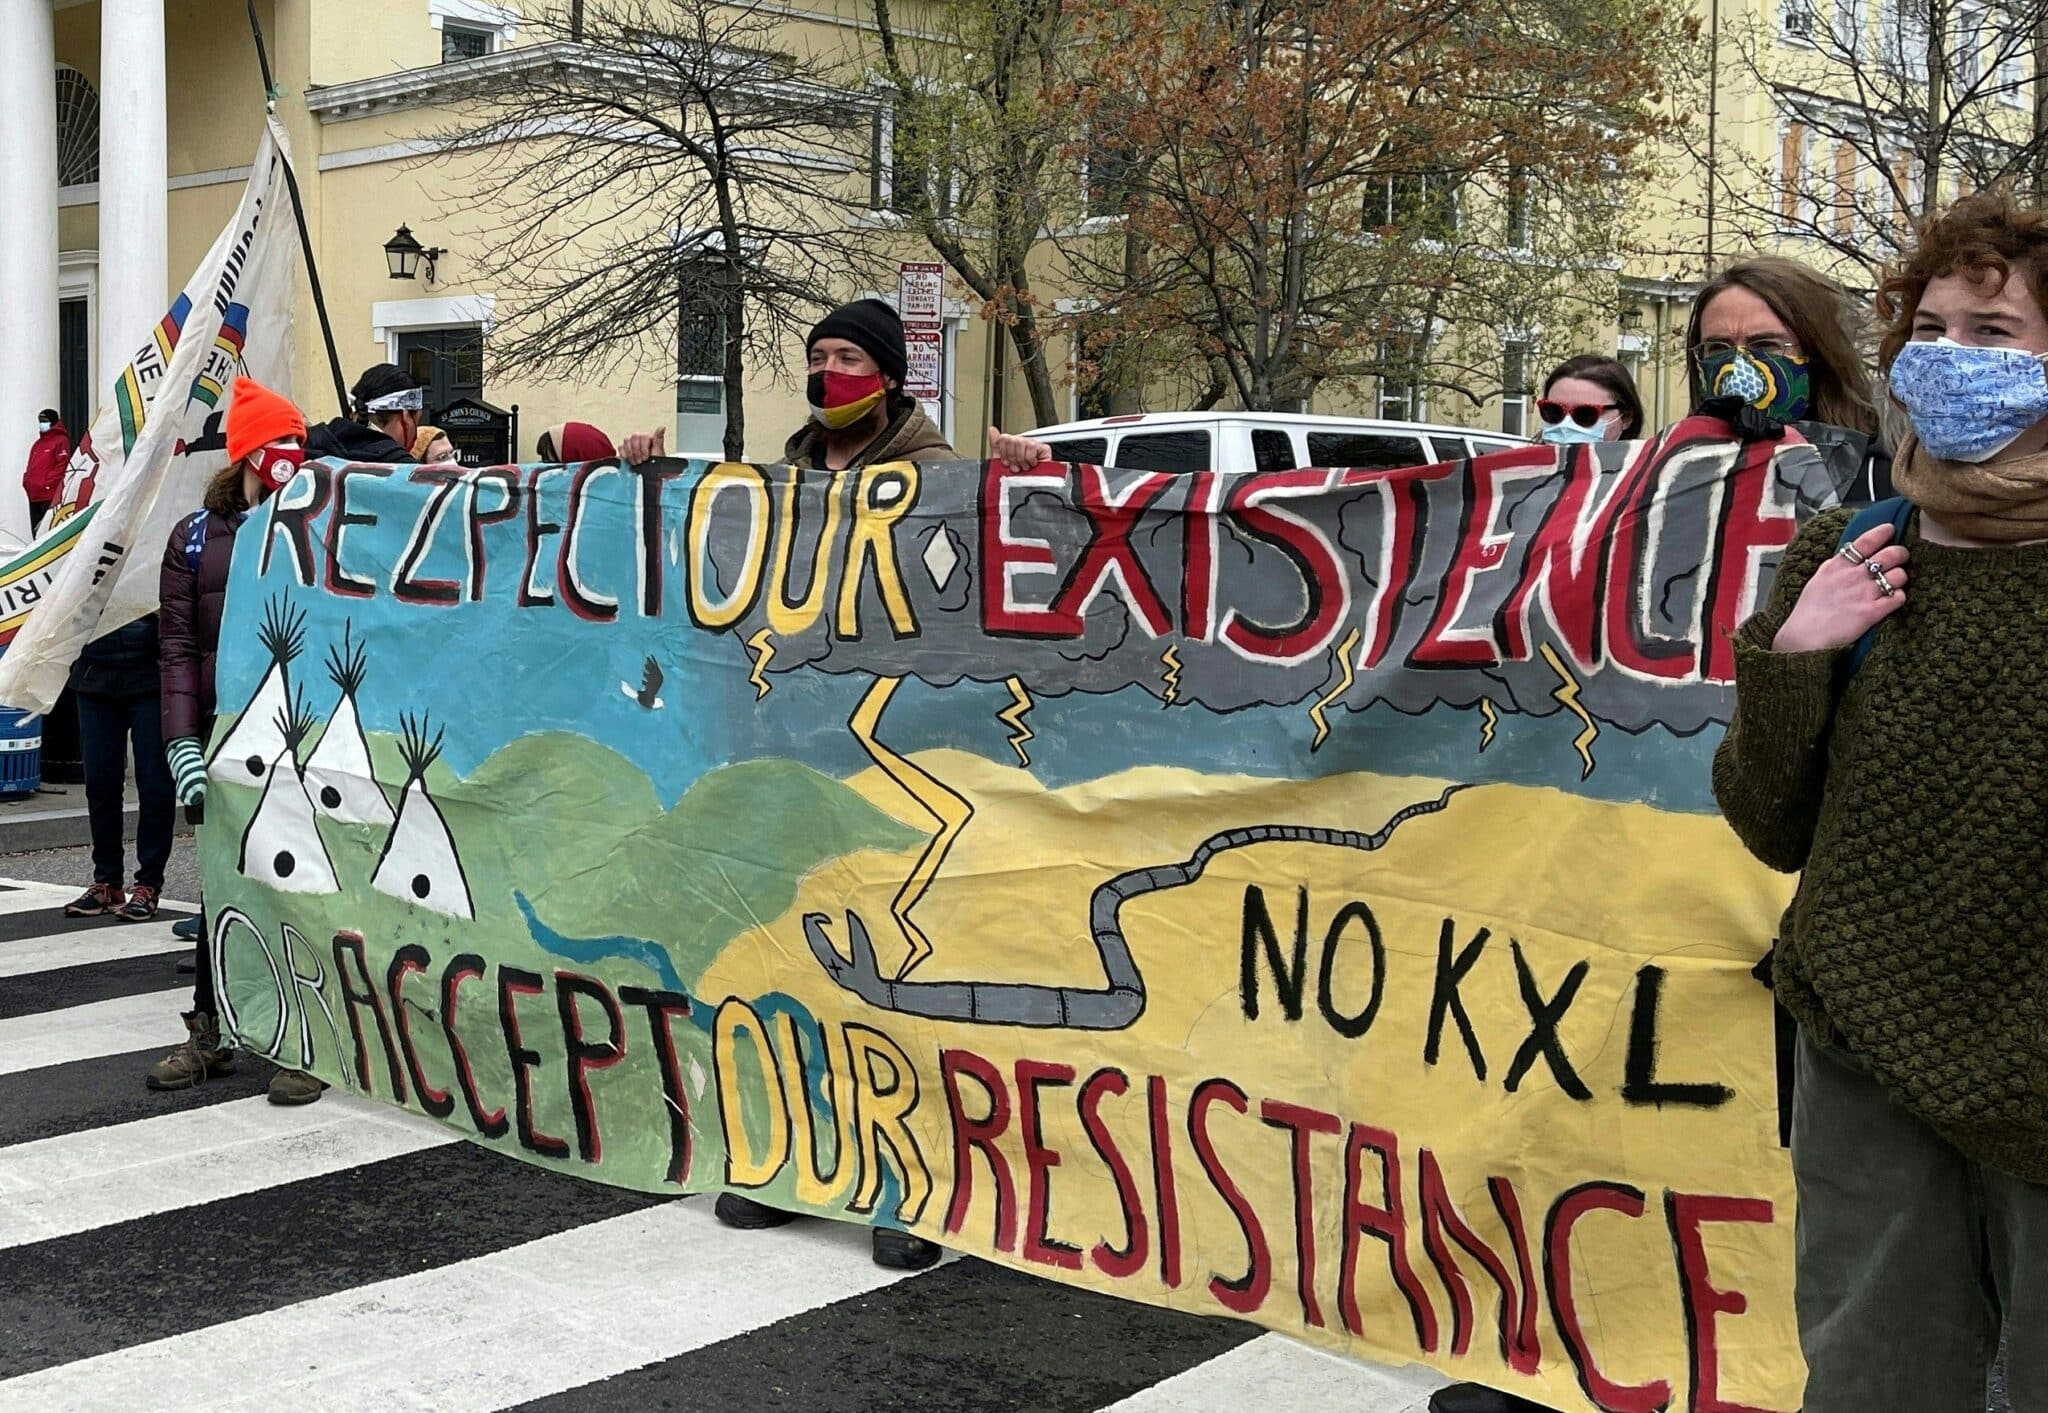 pipeline protest